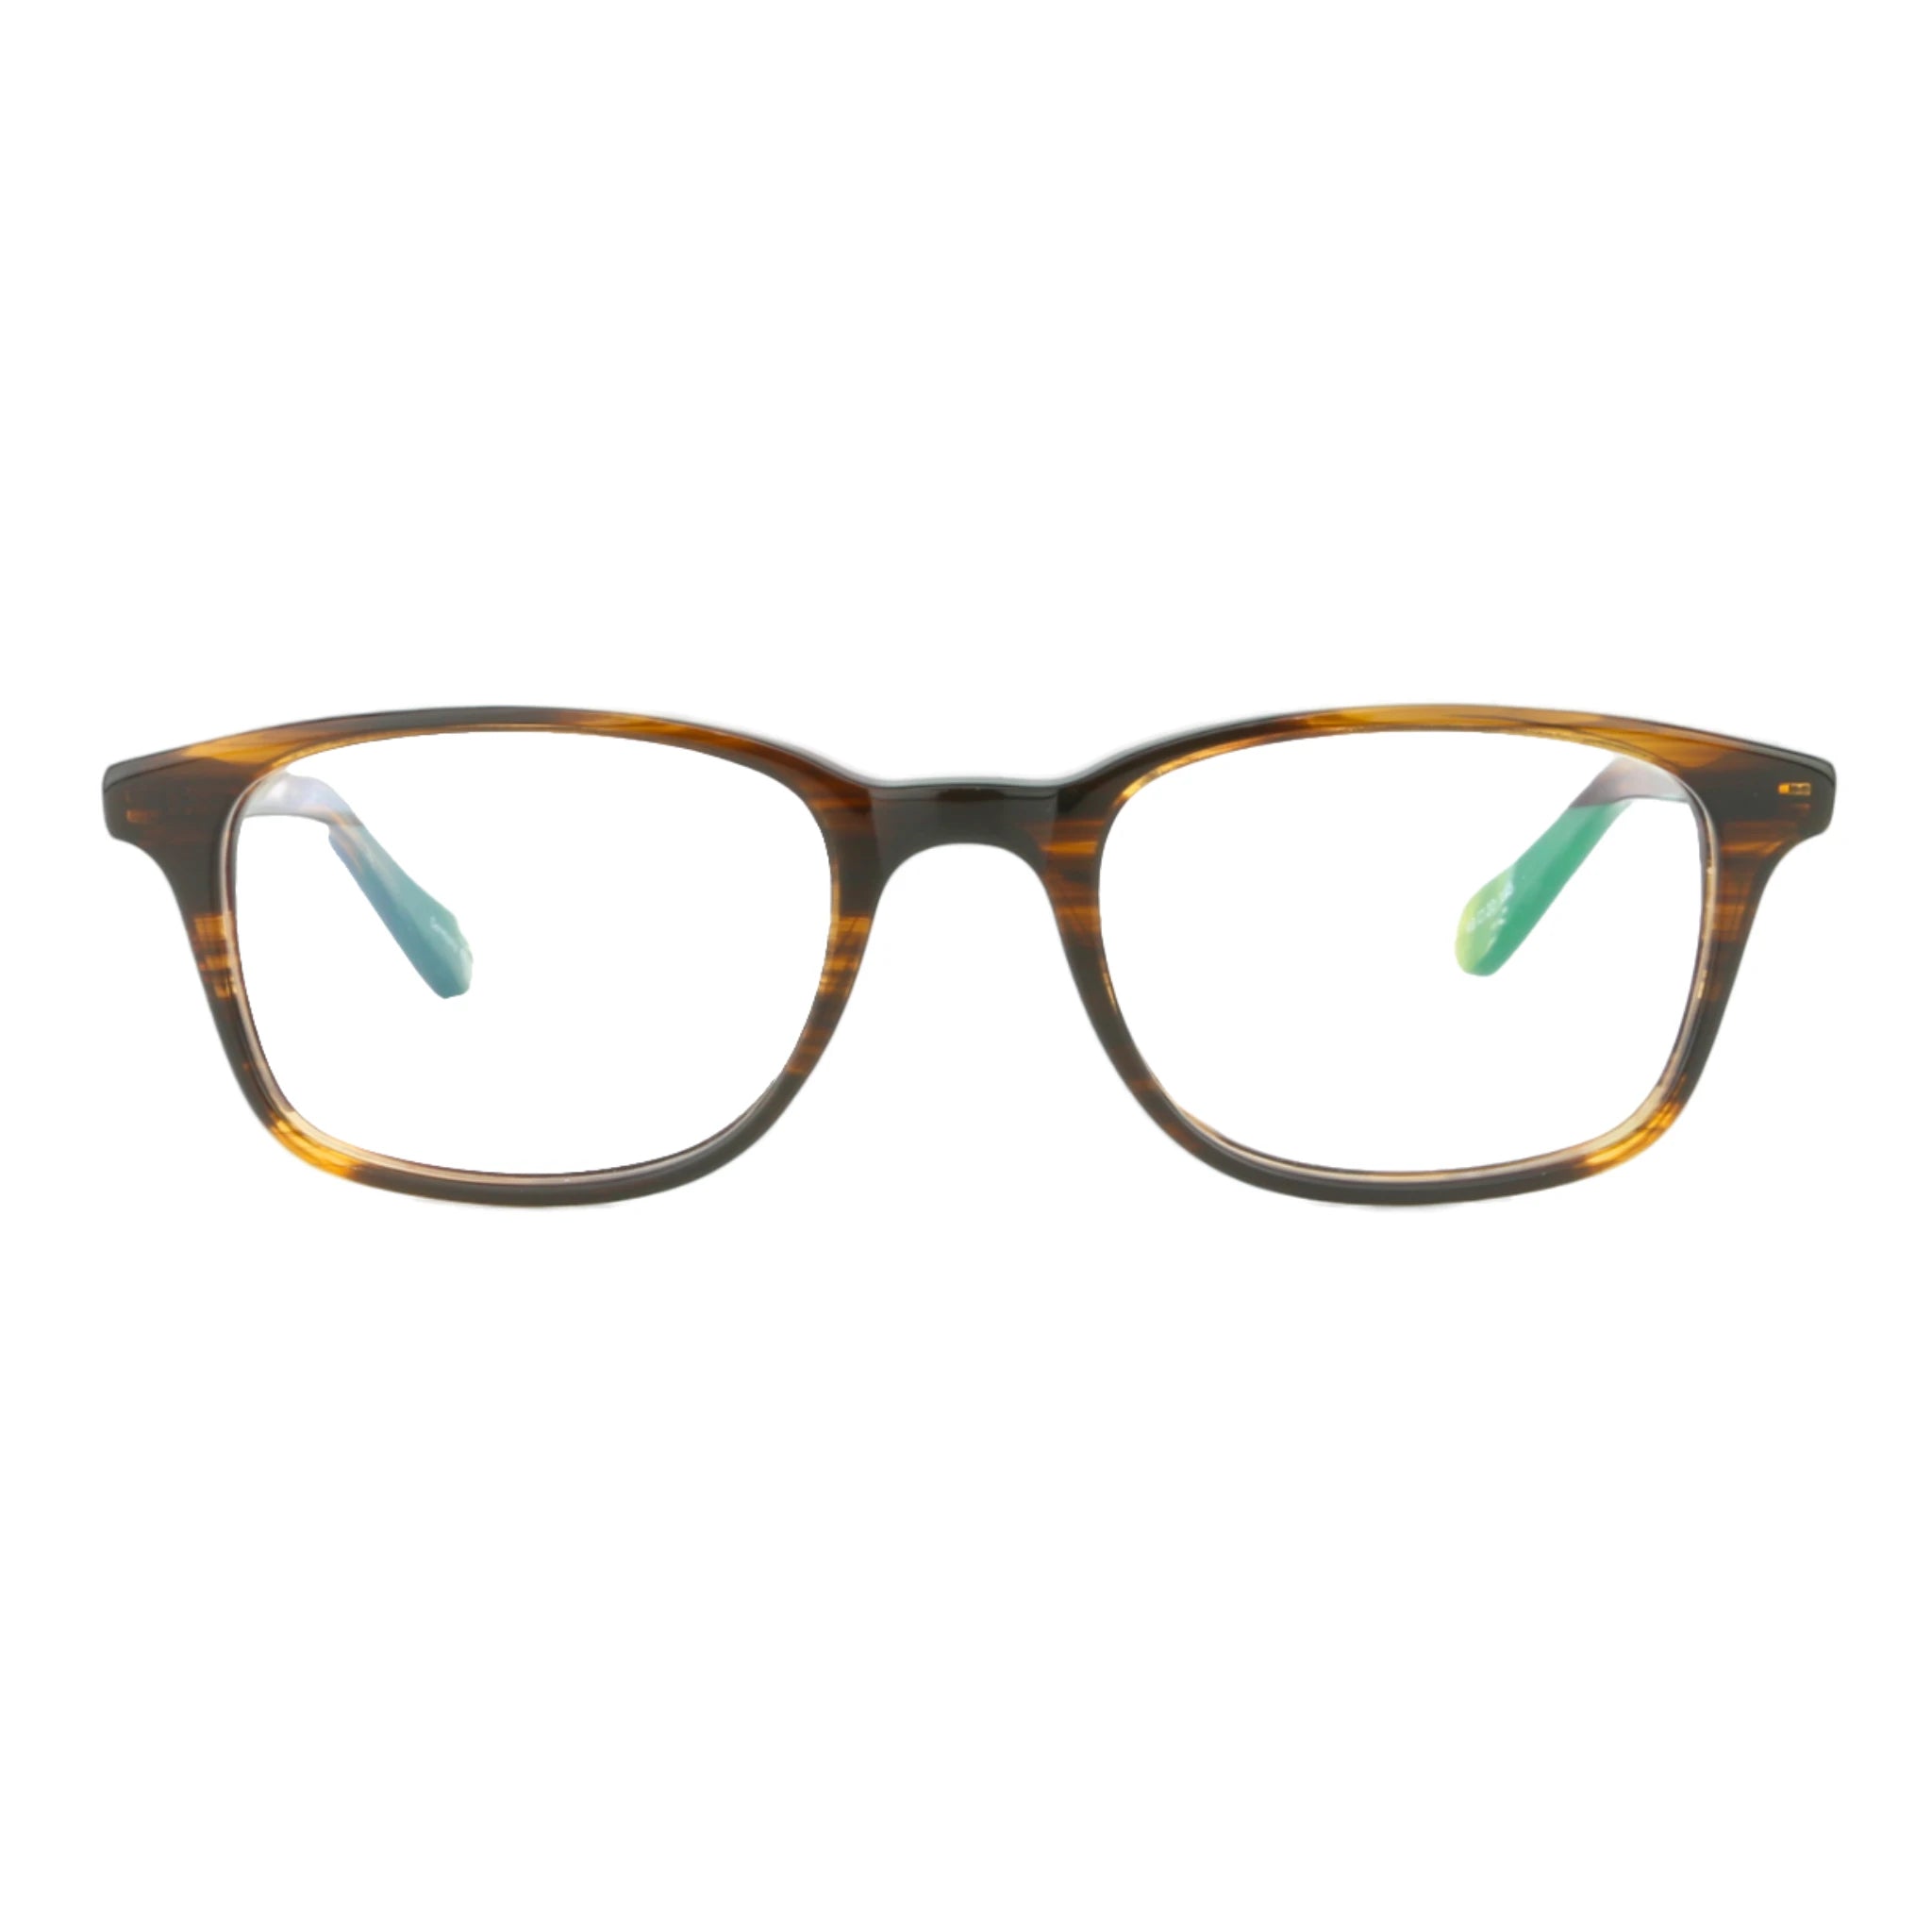 The Optical Co handmade glasses with prescription lenses